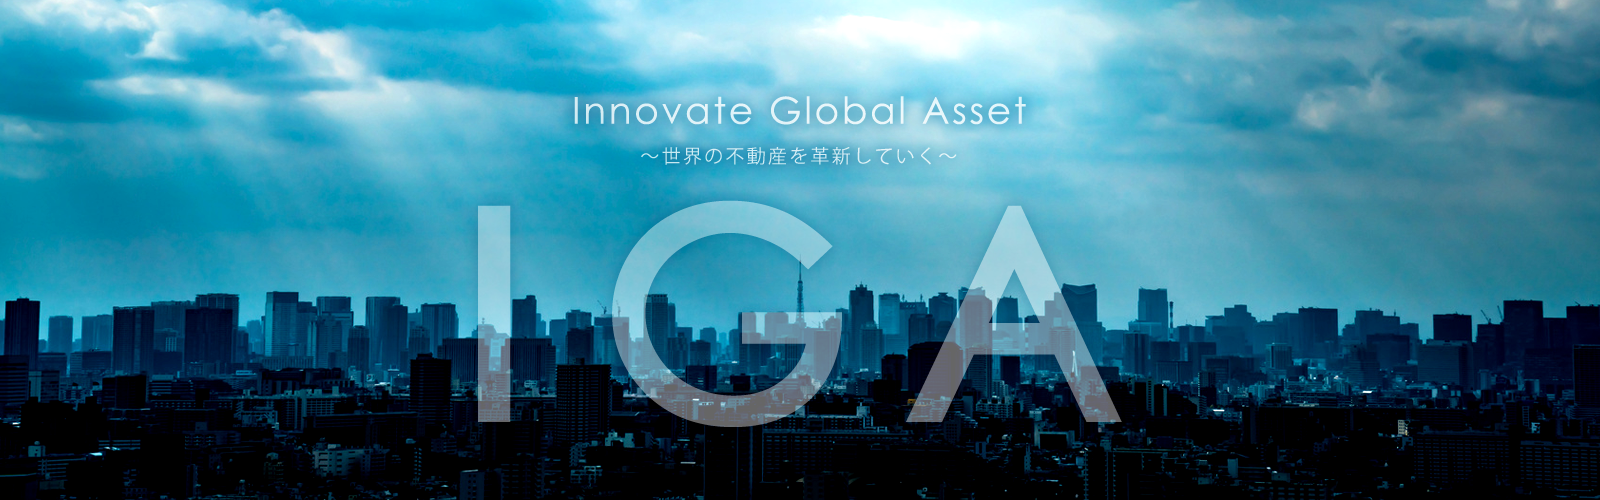 ”Innovation Global Asset”